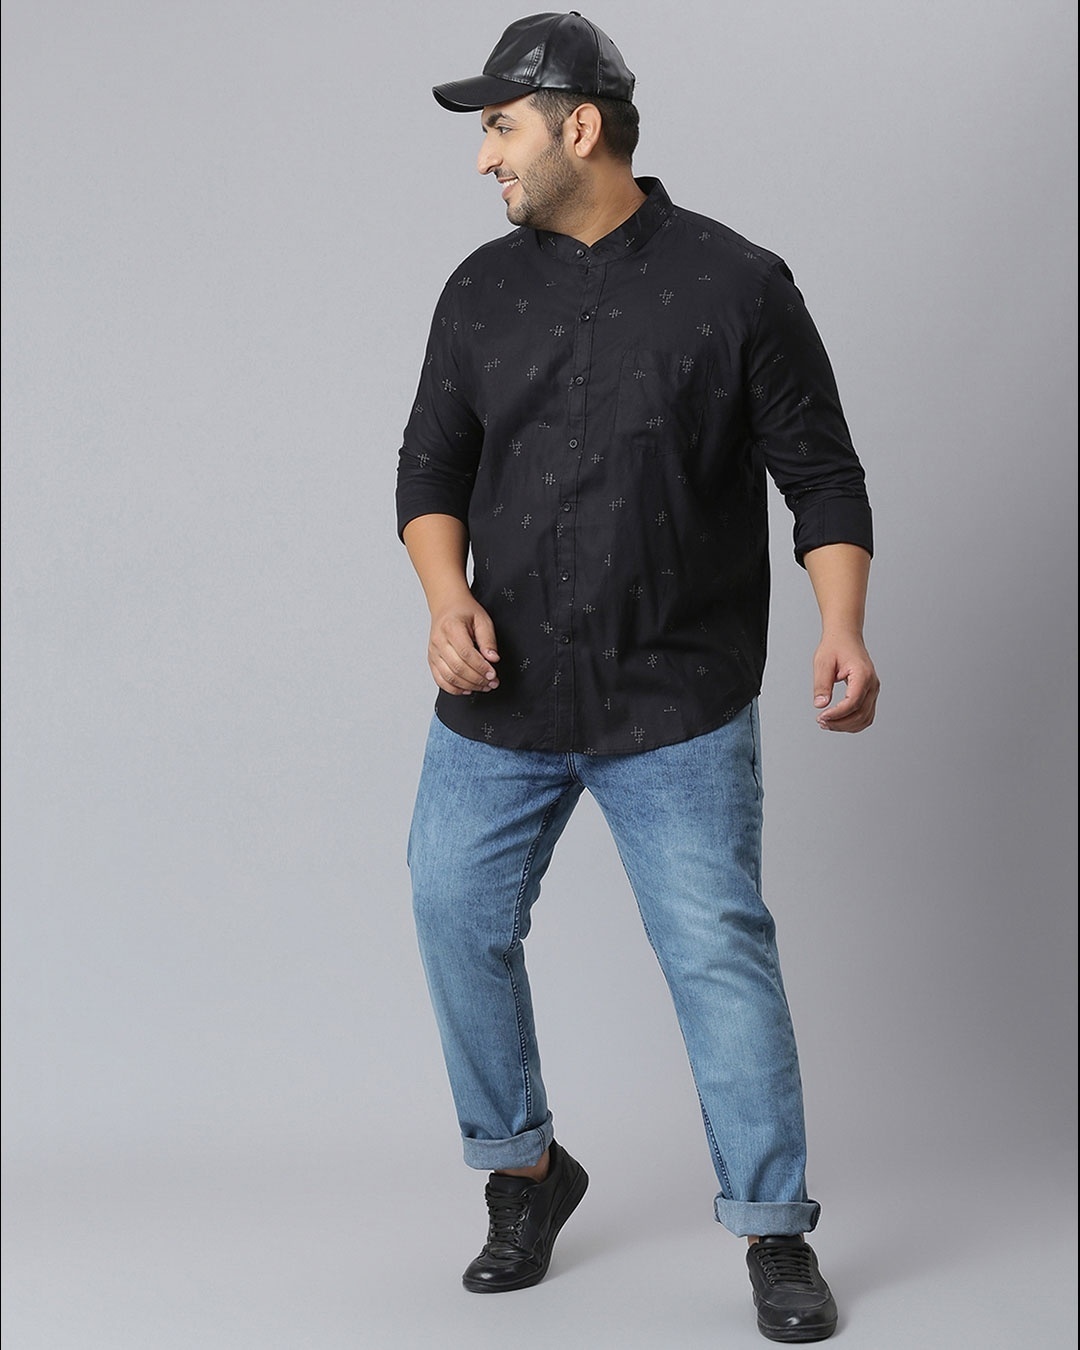 Shop Men's Black Stylish Full Sleeve Casual Shirt